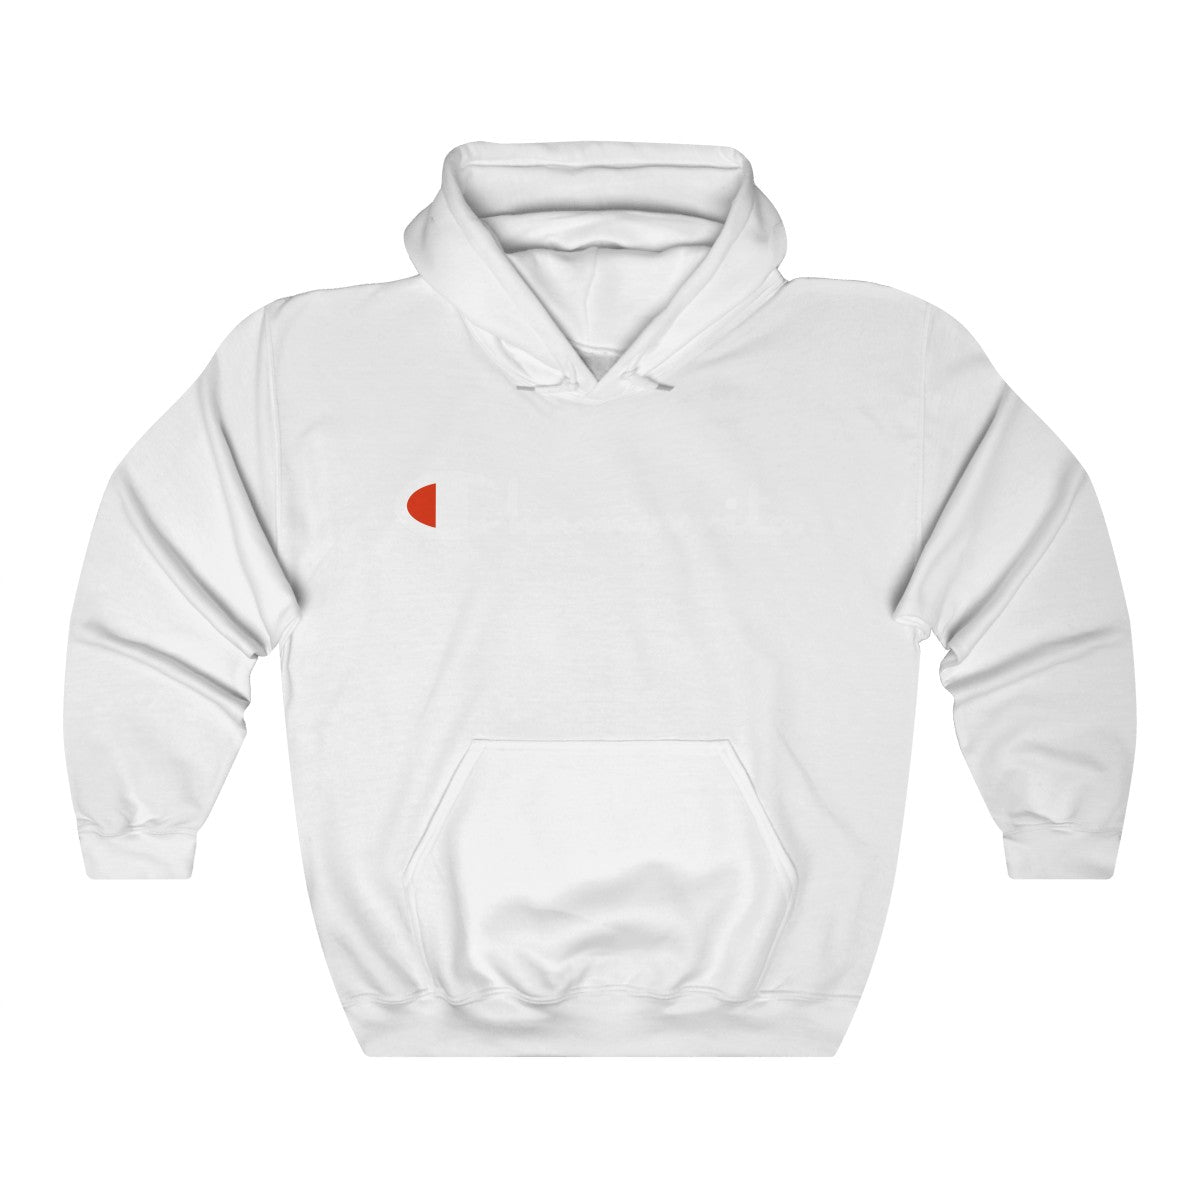 Chamorrita Unisex Heavy Blend™ Hooded Sweatshirt